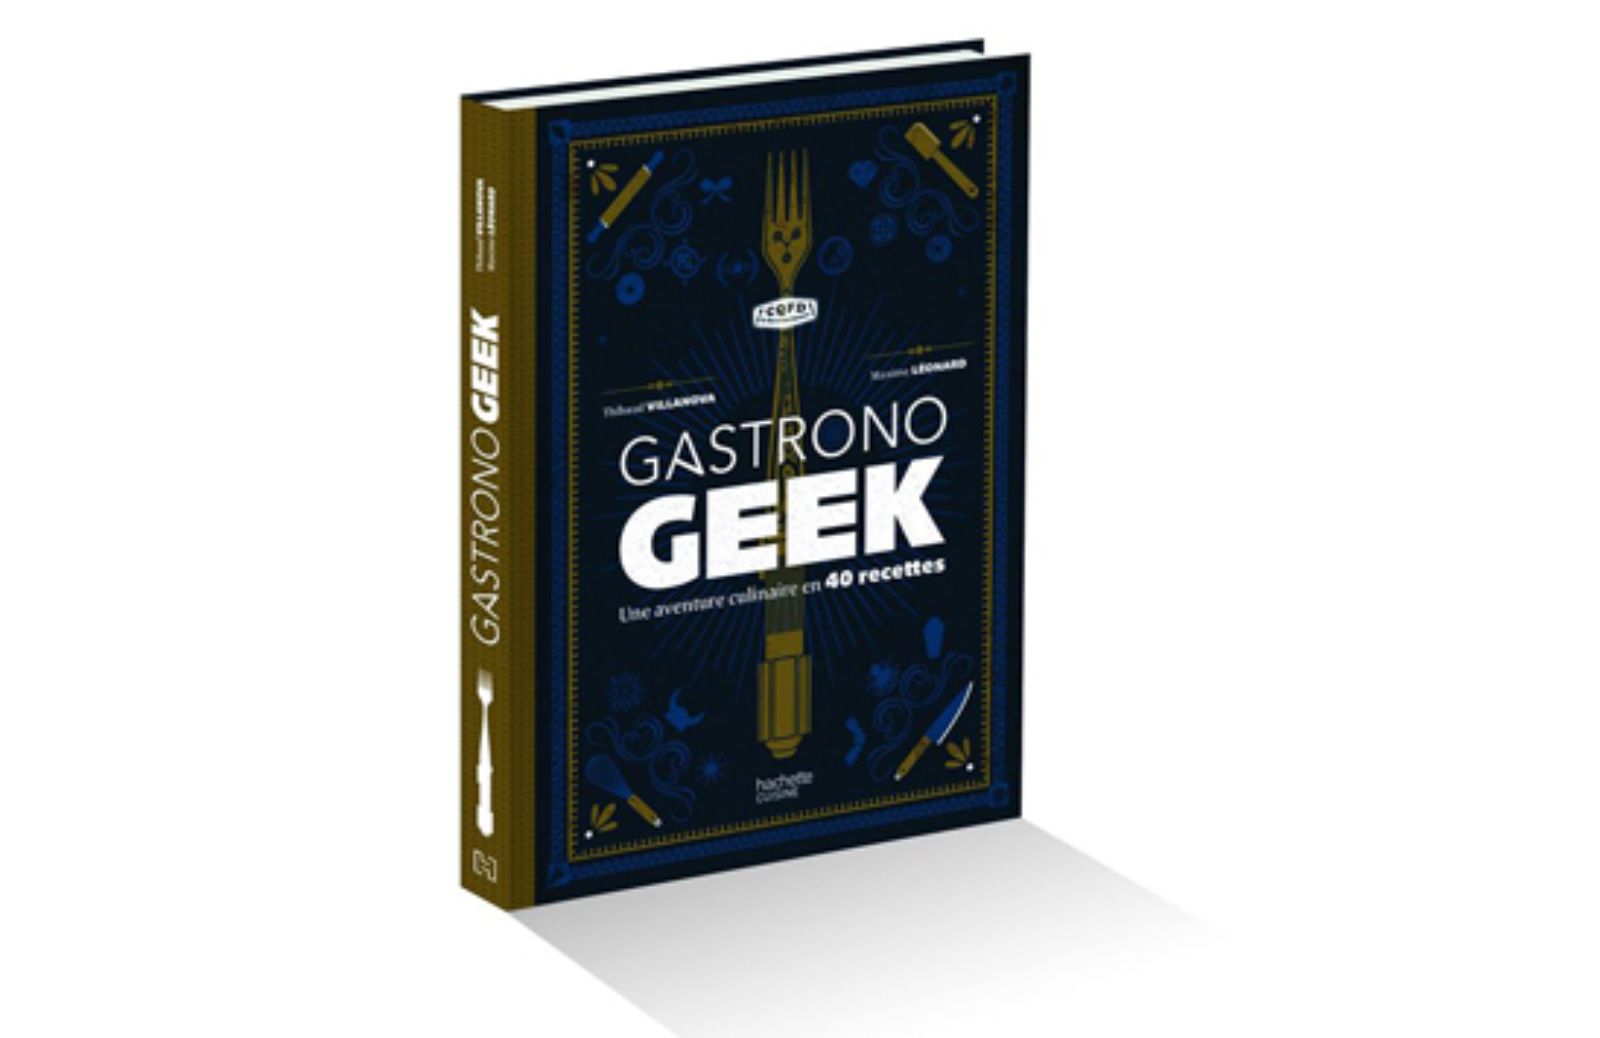 GastronoGeek, un libro di cucina per Geek